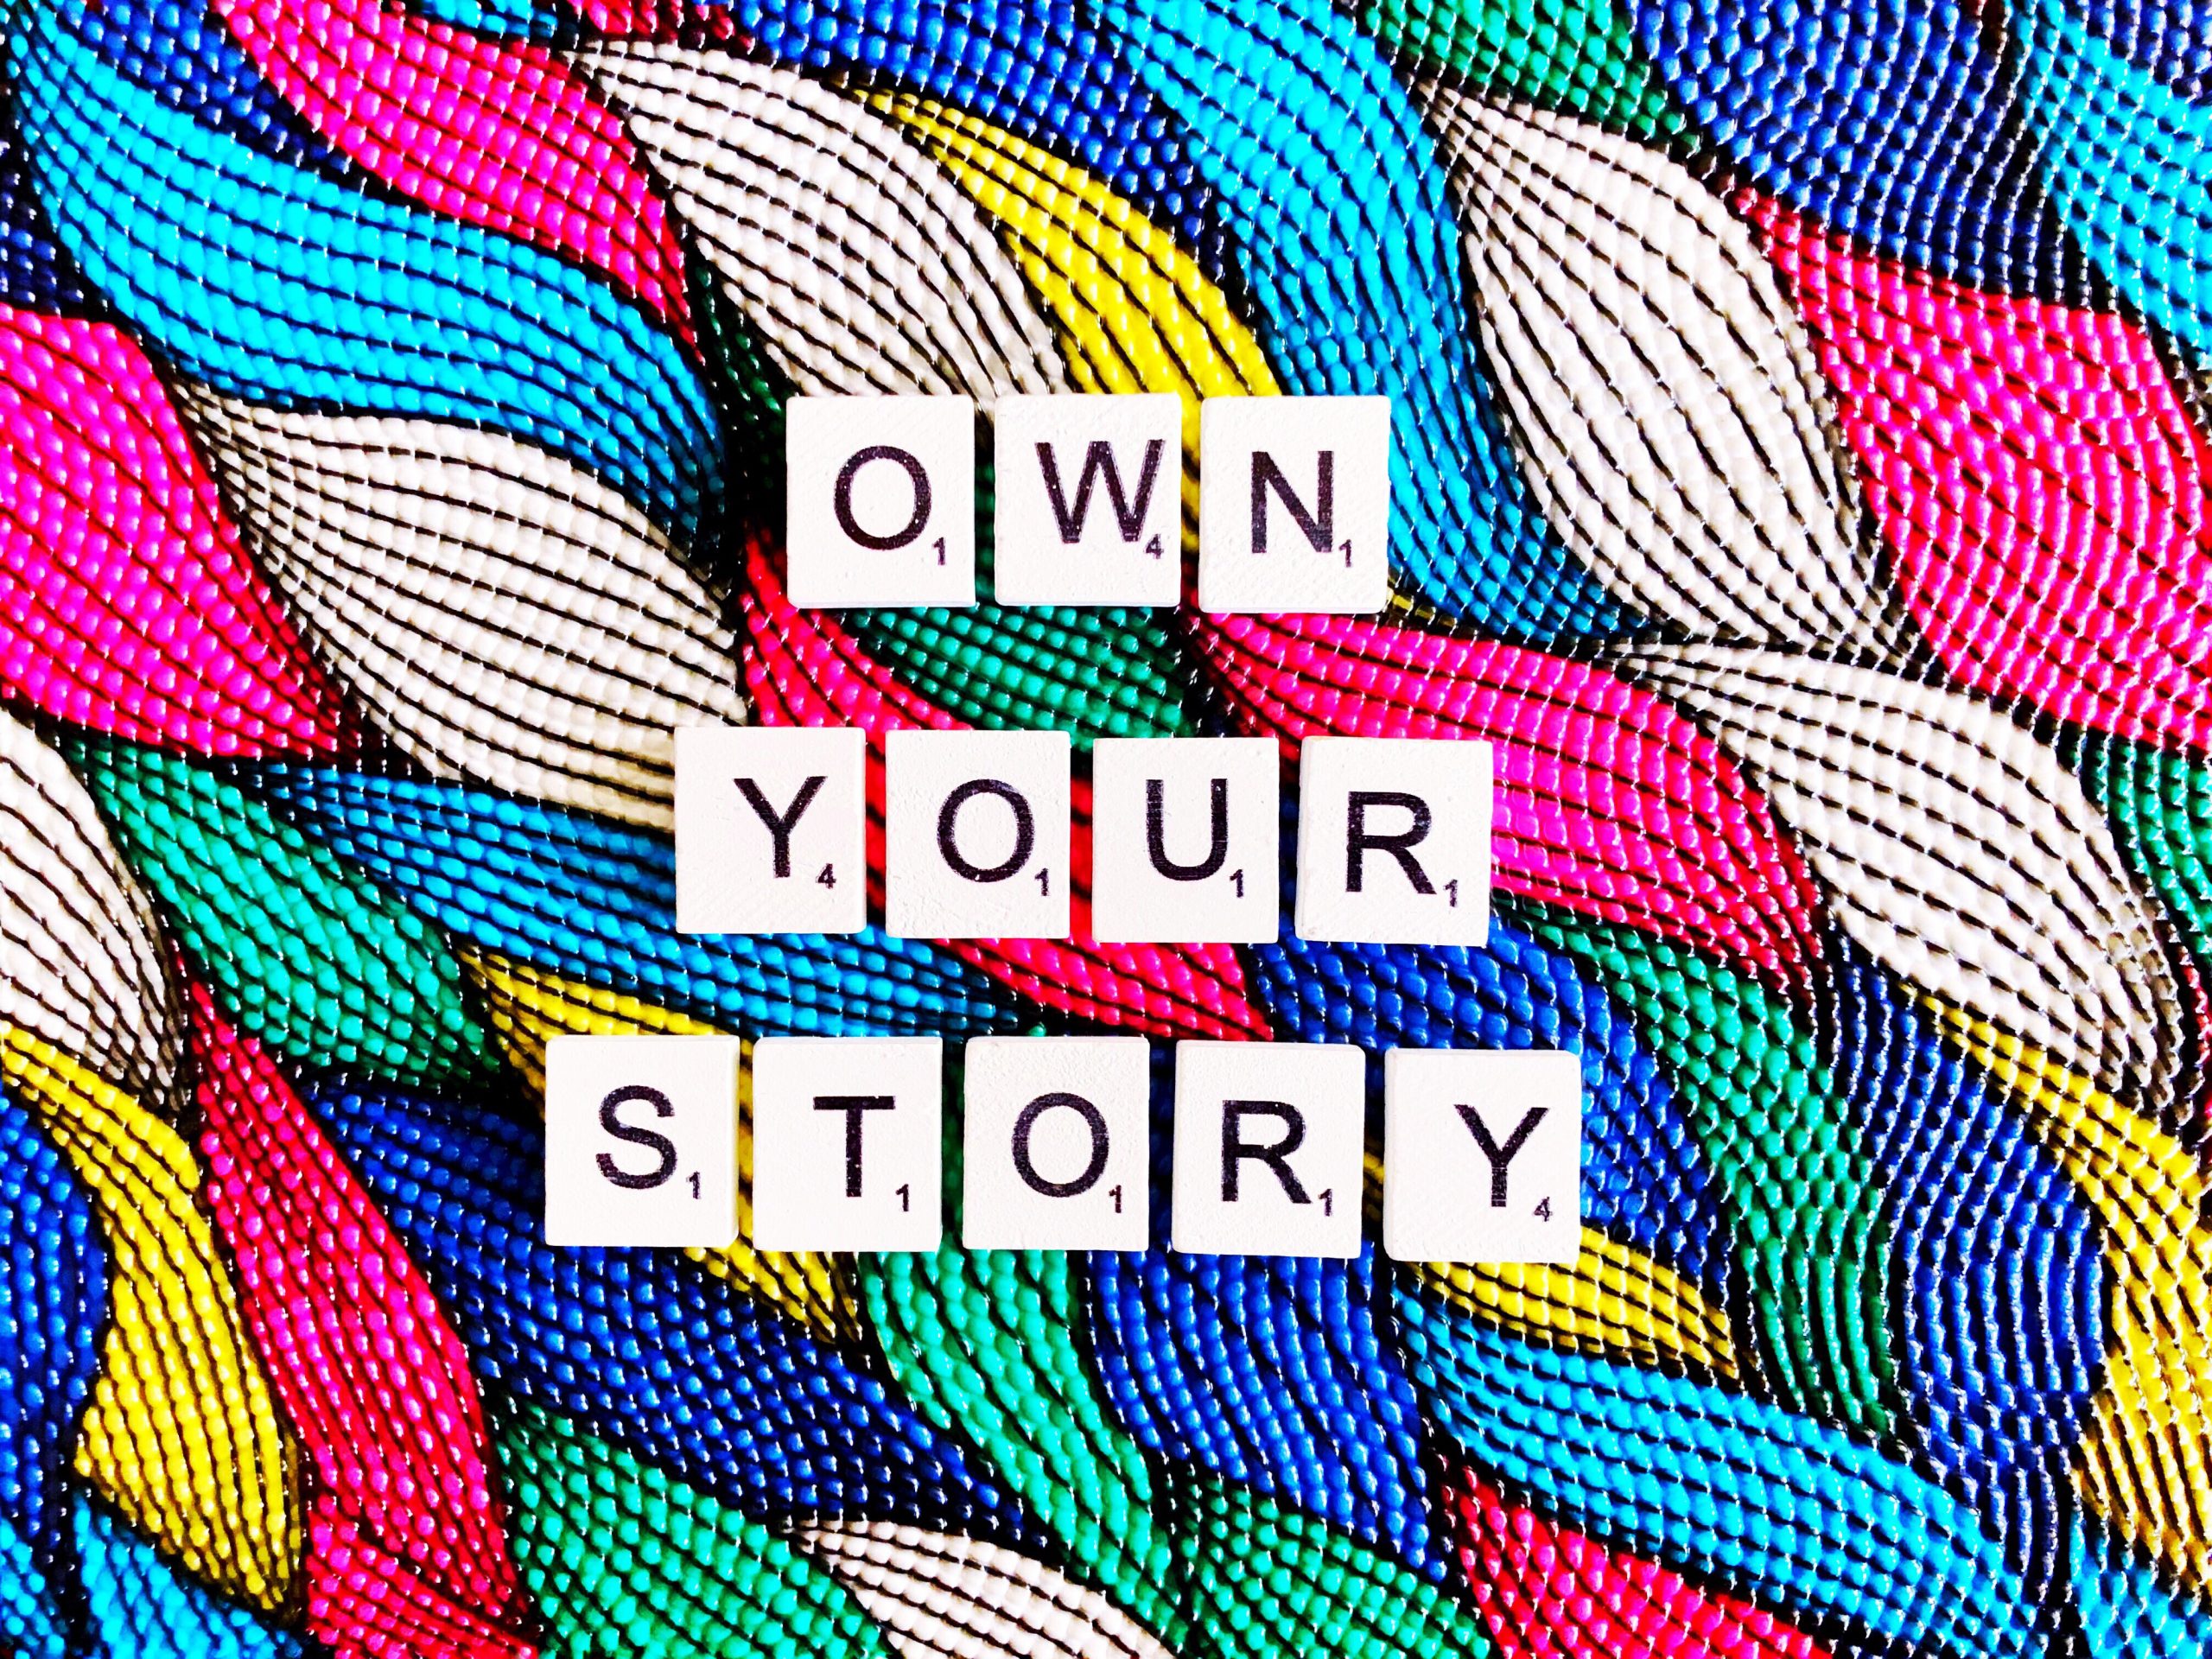 Scrabble tiles spelling 'own your story'